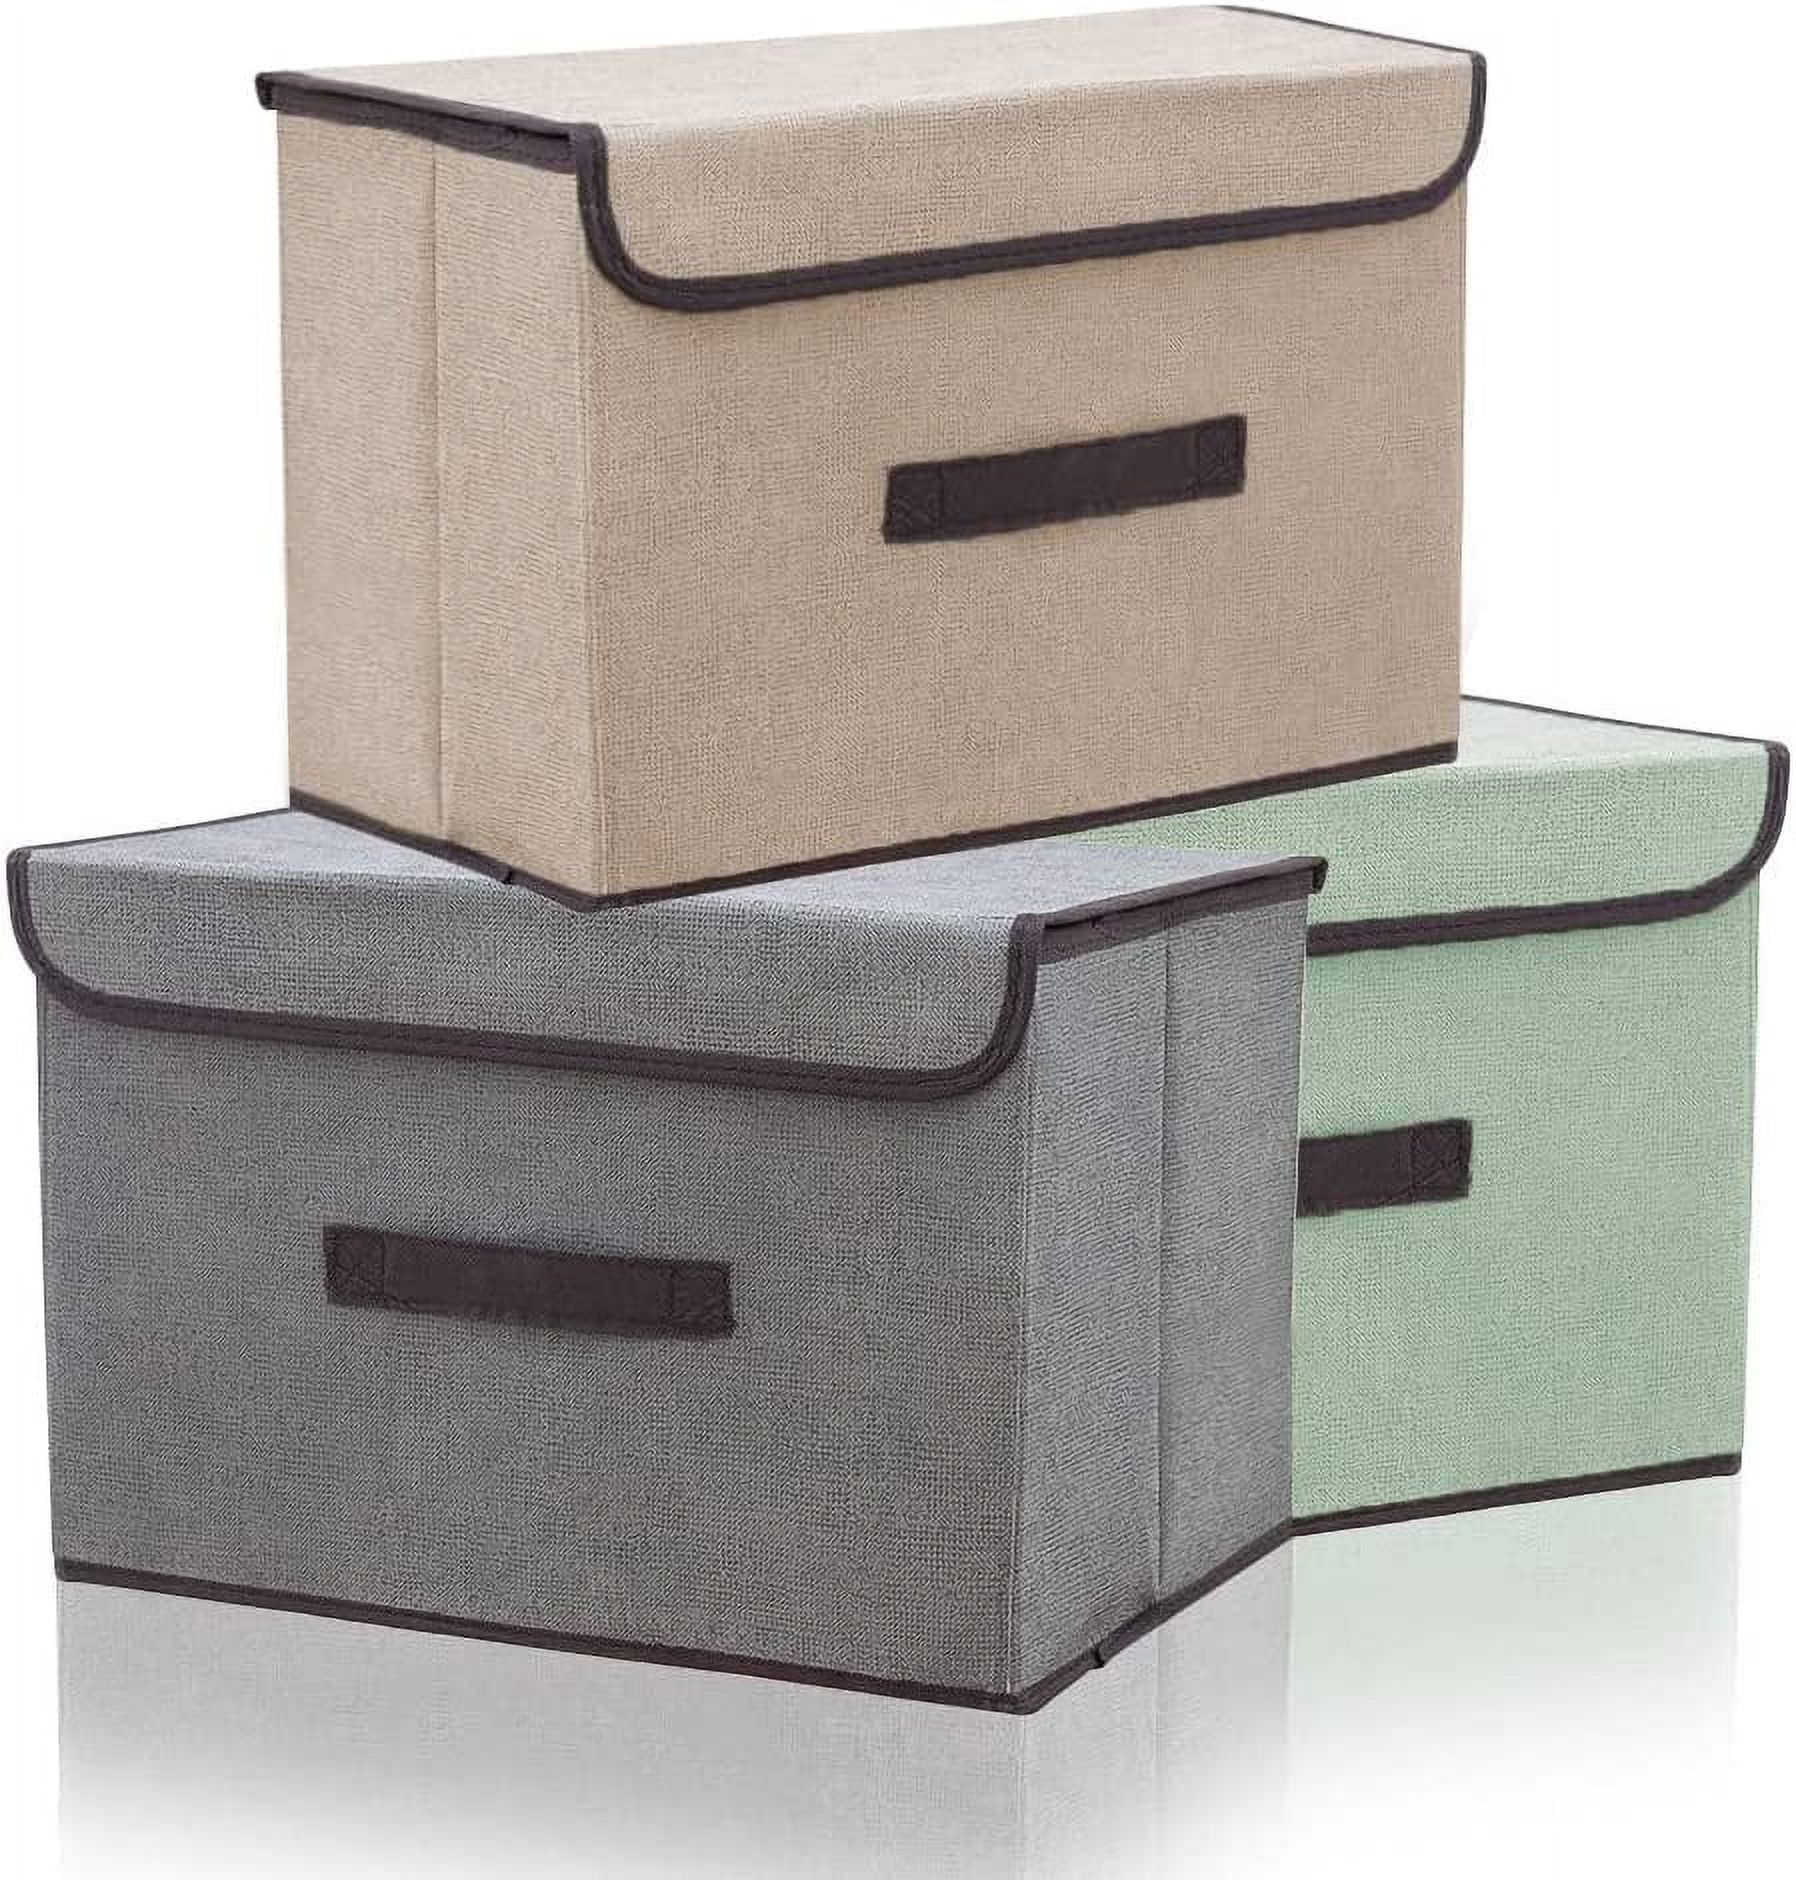  BESTOYARD 3pcs Box blanket fold collapsible storage bin  household Storage Box tote bins for storage with lid storage containers  with lids for organizing cover storage bin with lids bracket